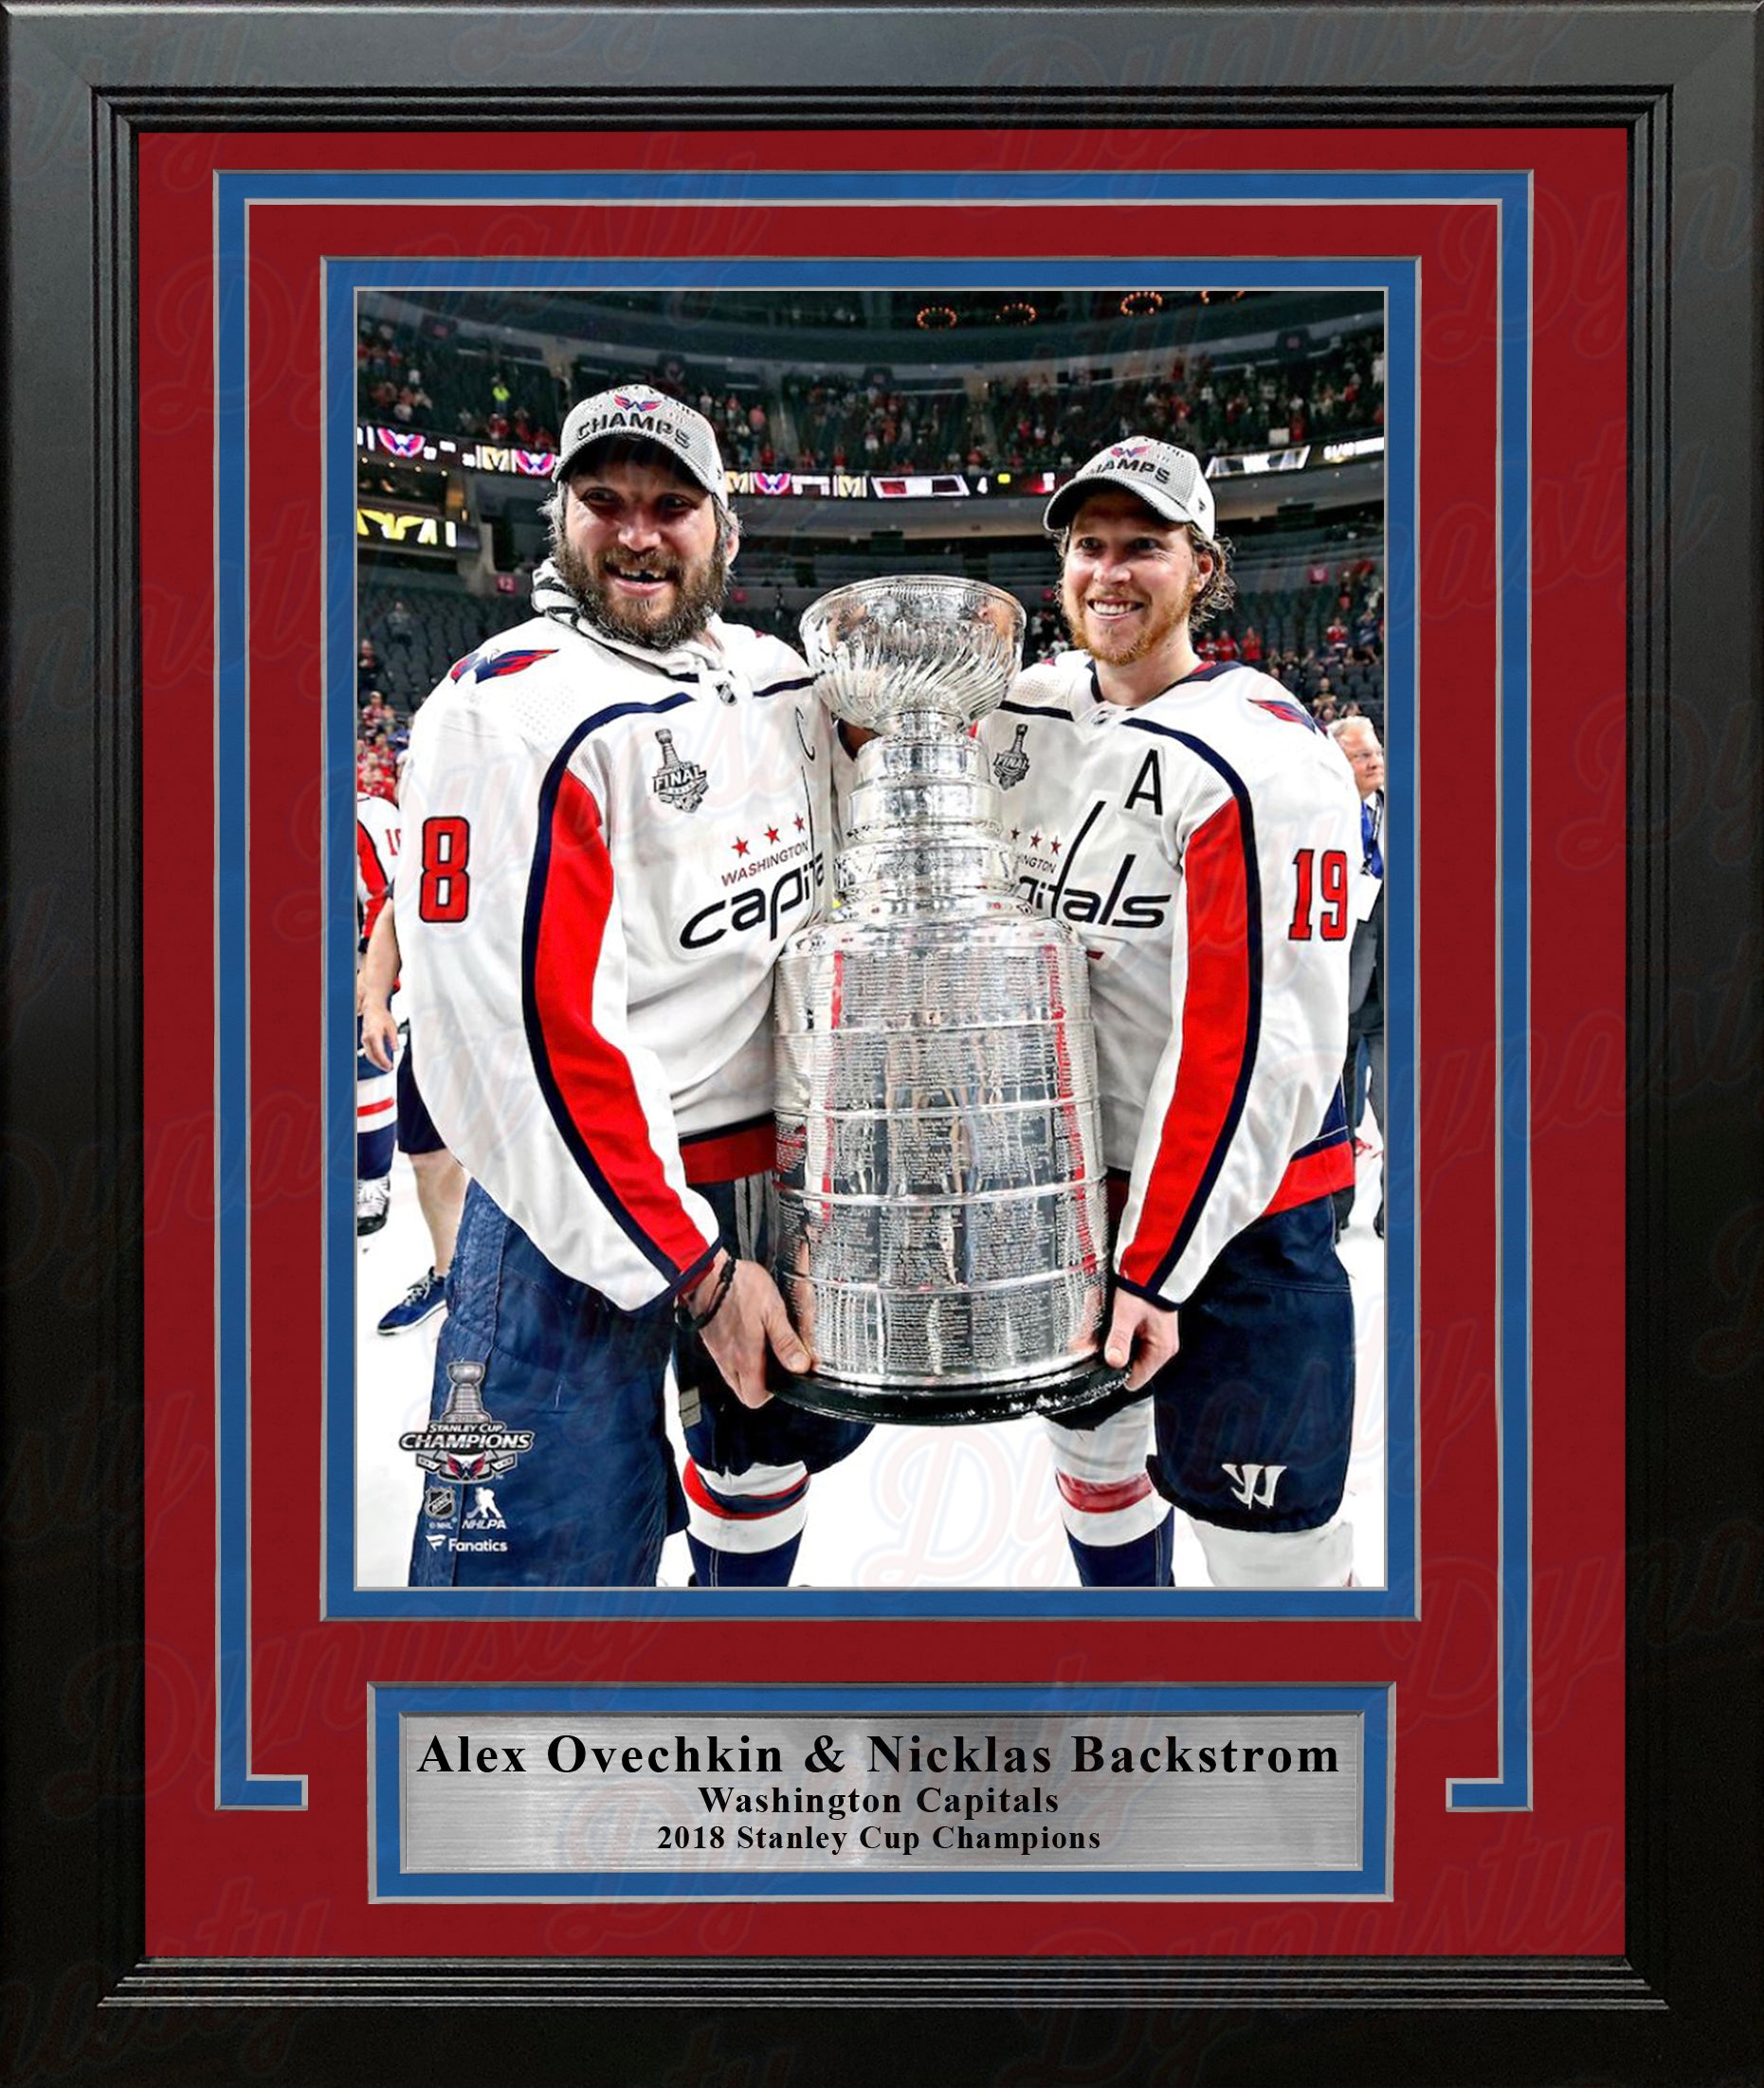 Alex Ovechkin & Nicklas Backstrom Washington Capitals '18 Stanley Cup 8x10 Framed Hockey Photo - Dynasty Sports & Framing 